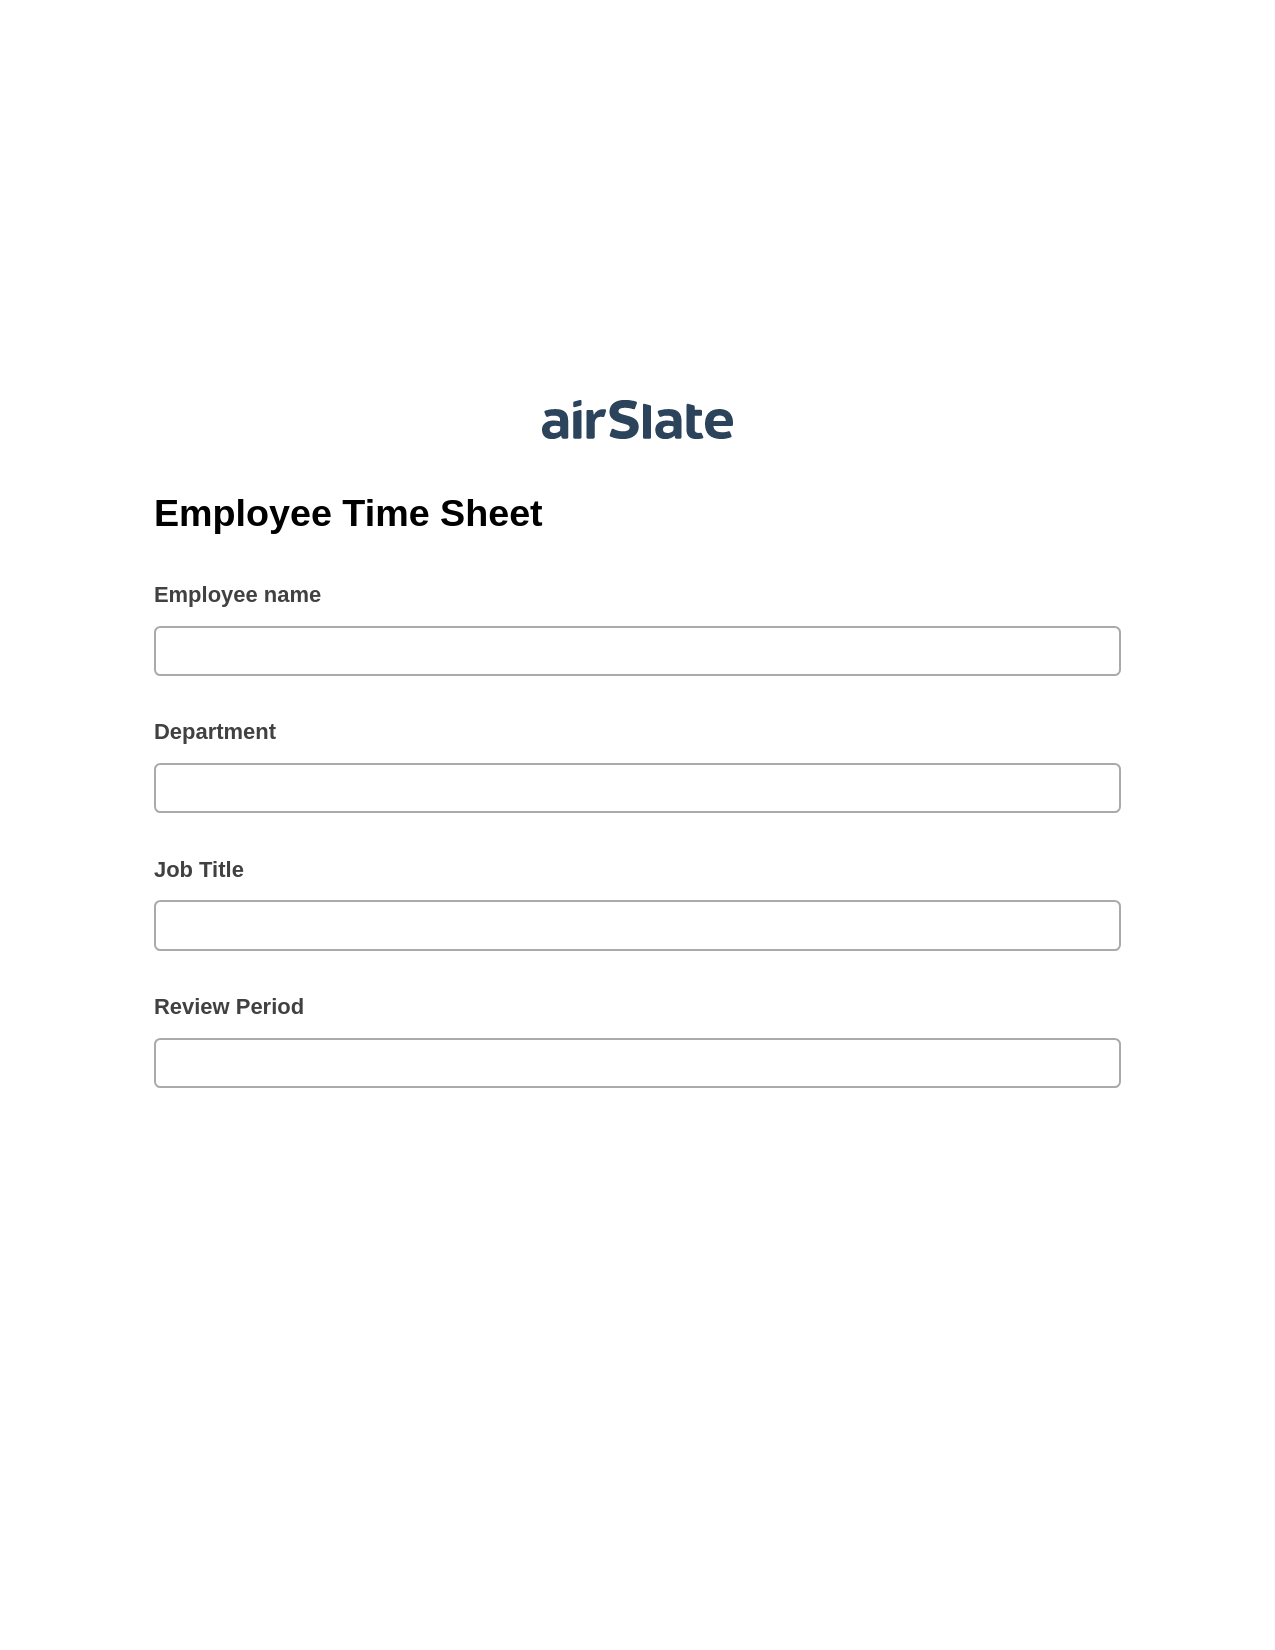 Employee Time Sheet Pre-fill from CSV File Bot, Google Calendar Bot, Slack Two-Way Binding Bot